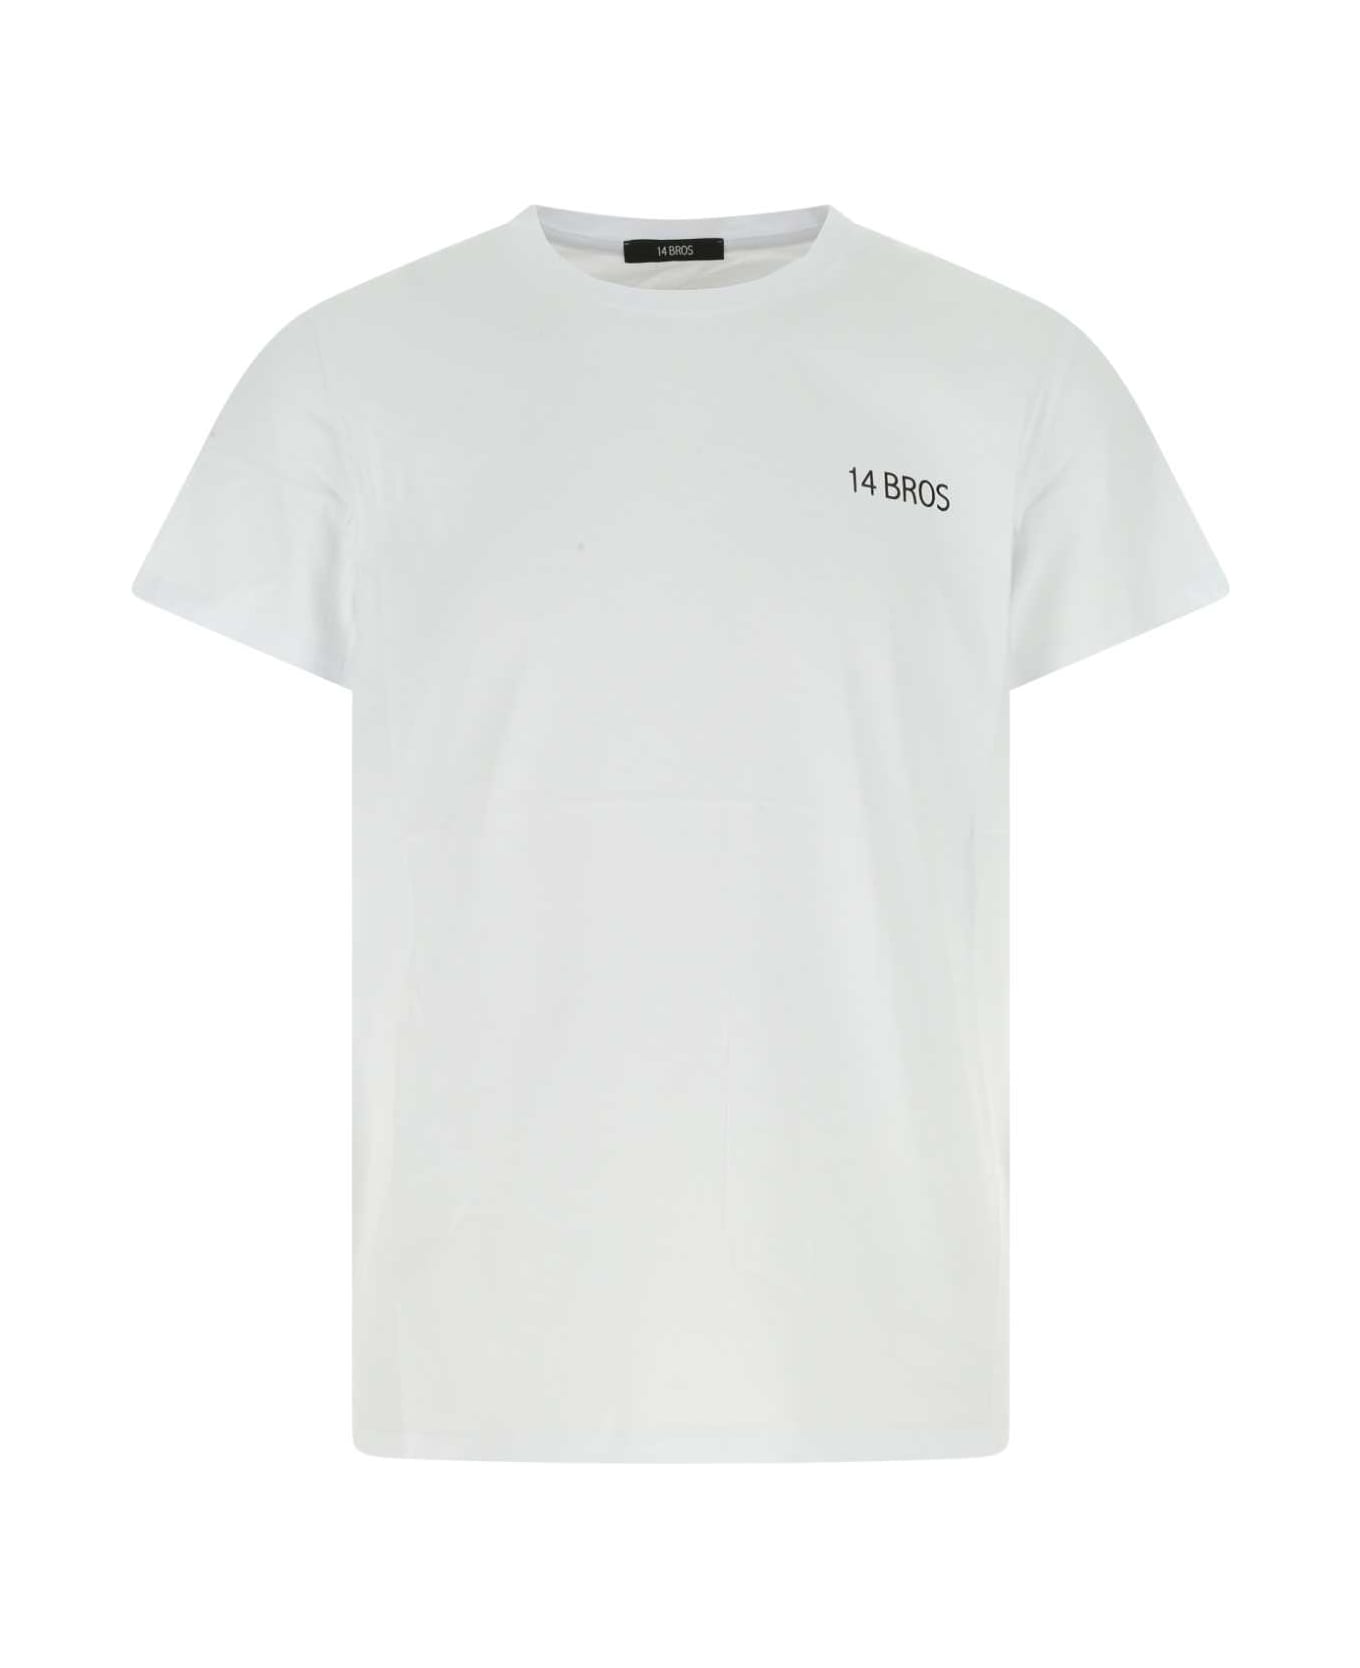 14 Bros White Cotton T-shirt - 001 シャツ